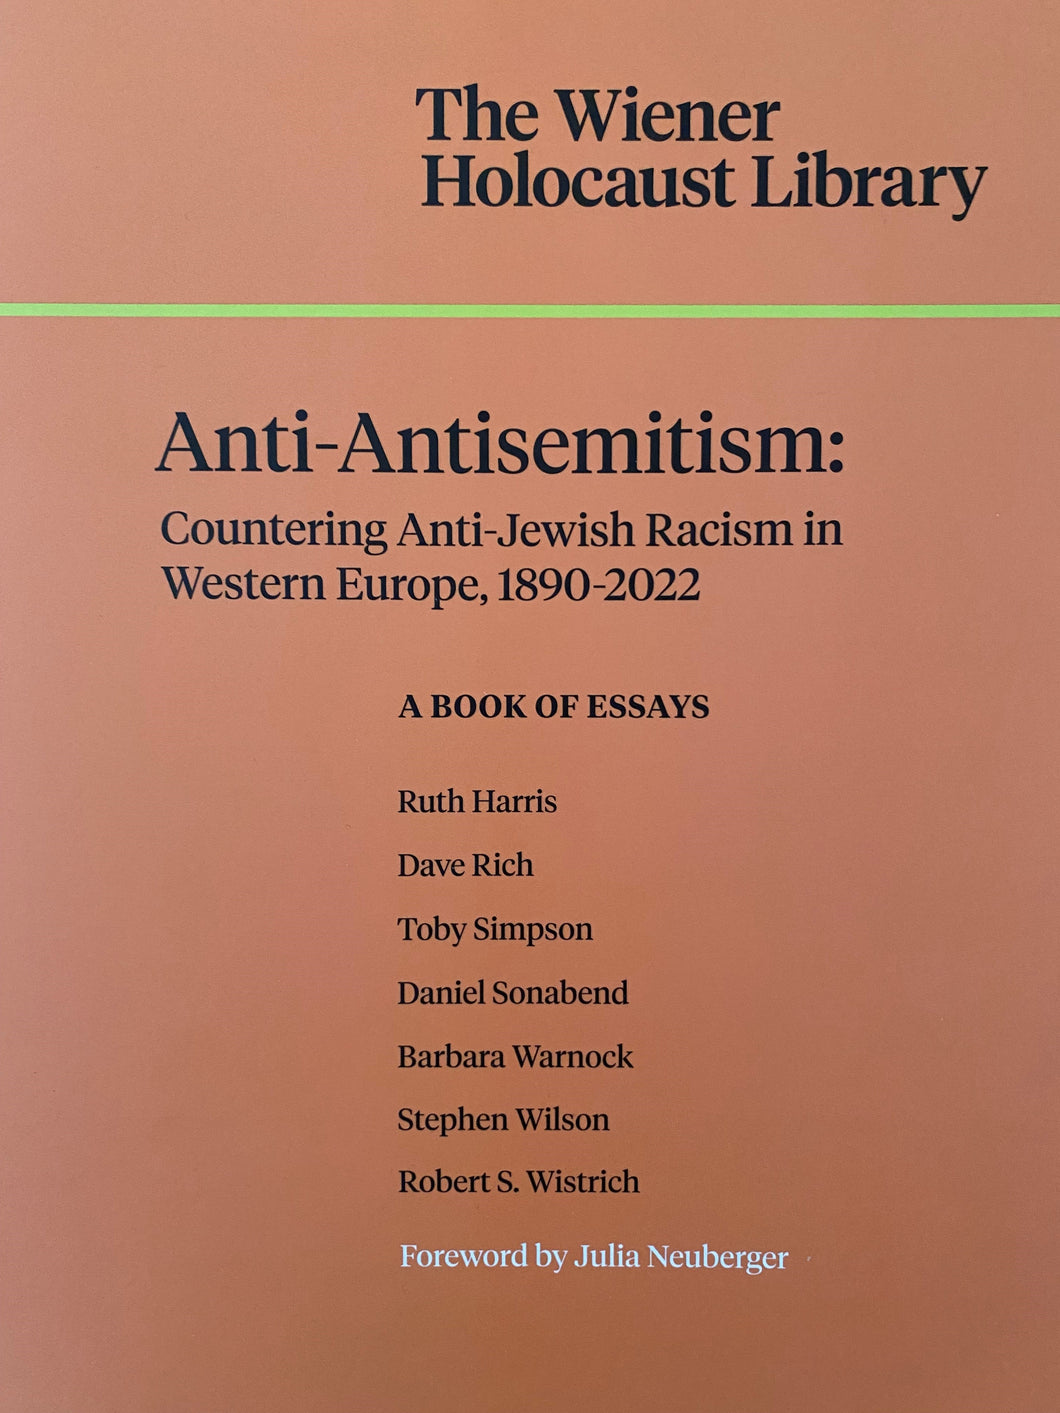 Anti-Antisemitism: Countering Anti-Jewish Racism in Western Europe, 1890-2022